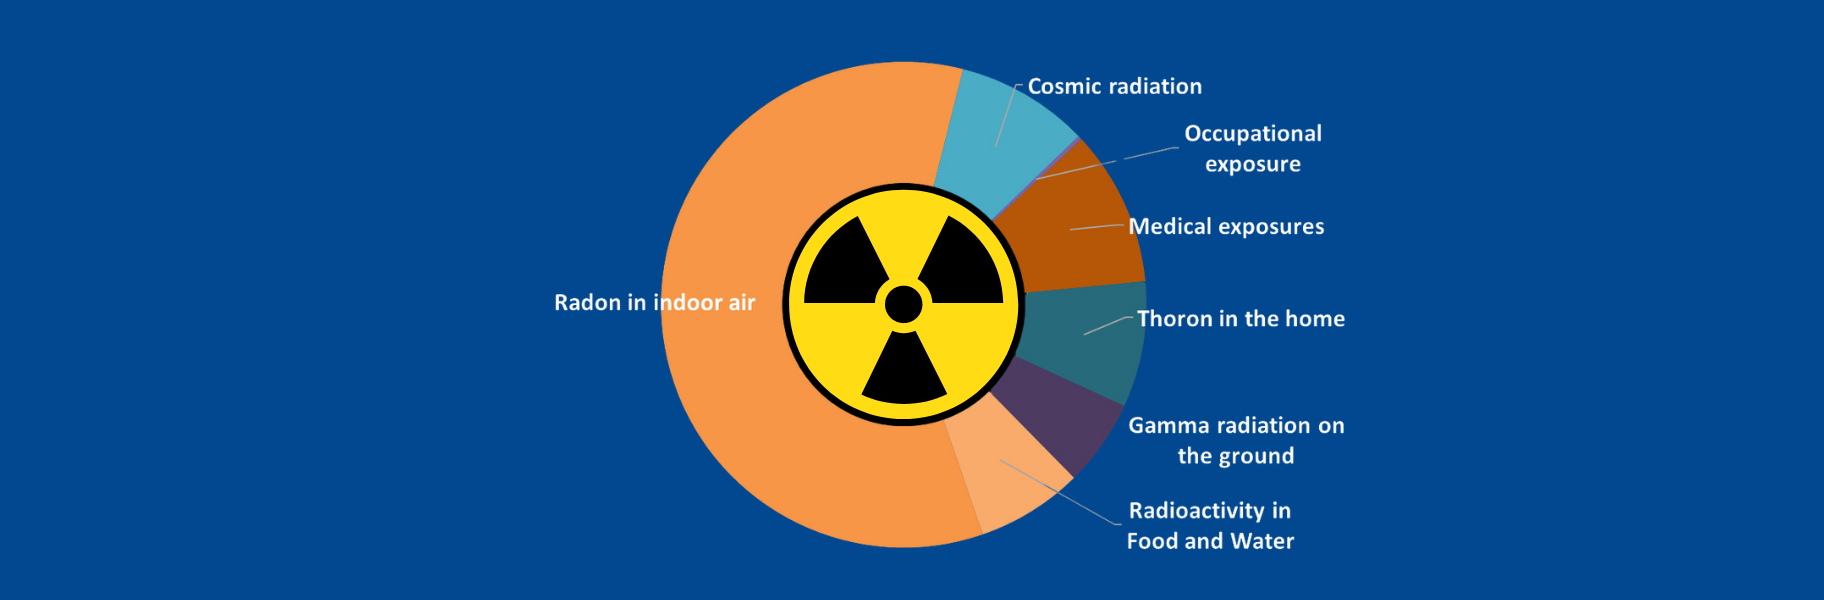 Decorative image of Pie Chart showing national average radiation dose